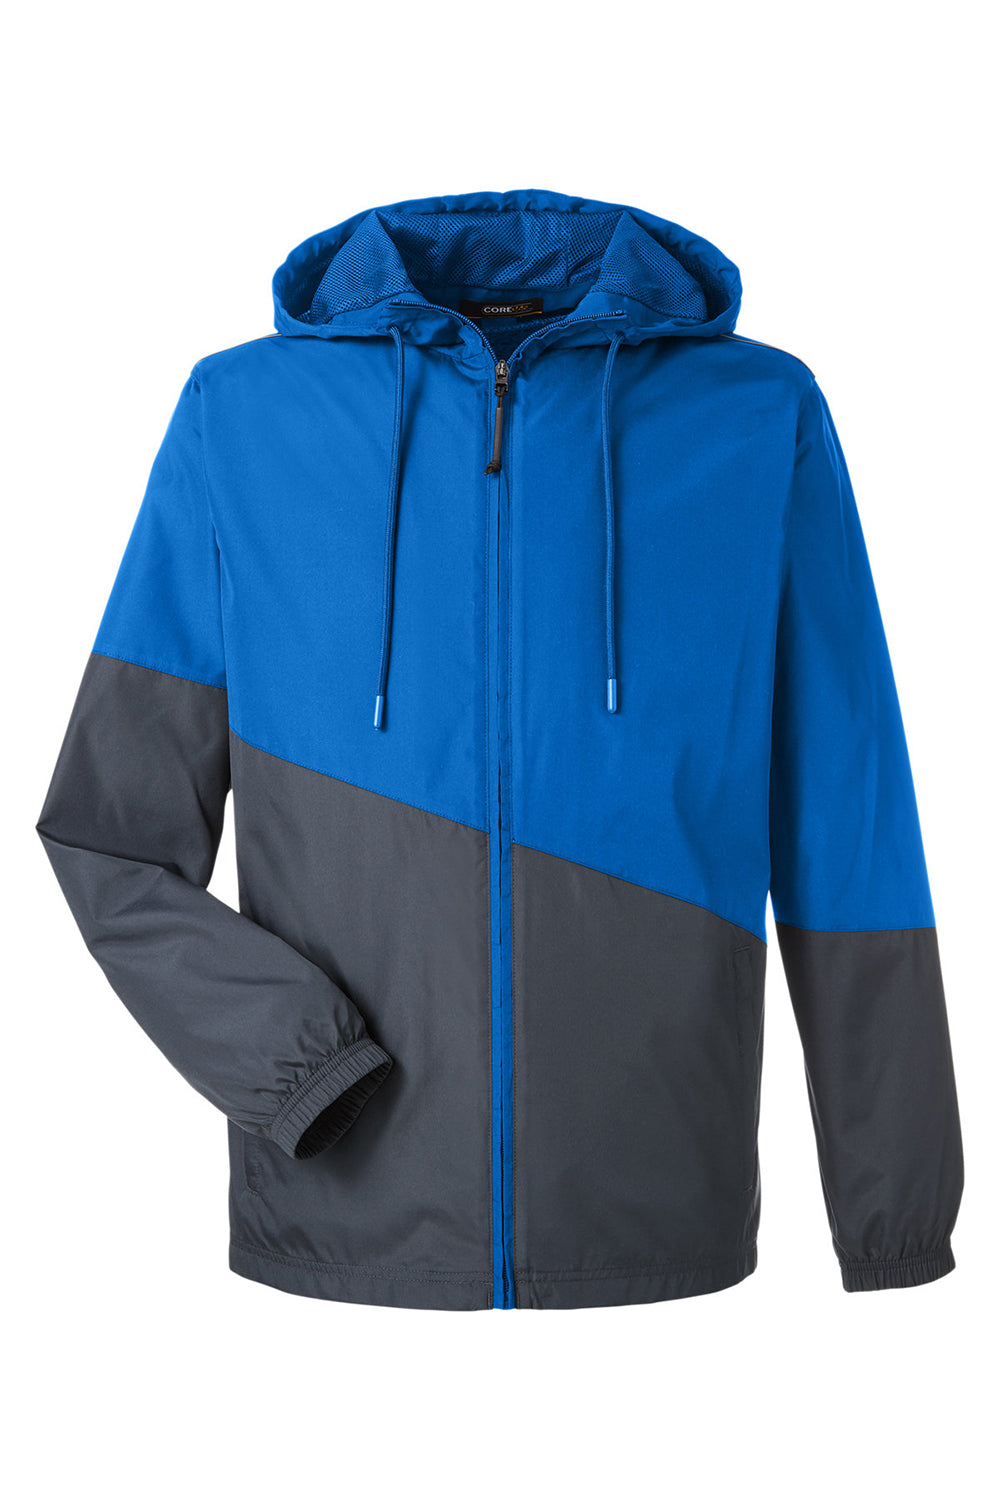 Core 365 CE710 Mens Techno Lite Colorblock Full Zip Windbreaker Jacket True Royal Blue/Carbon Grey Flat Front